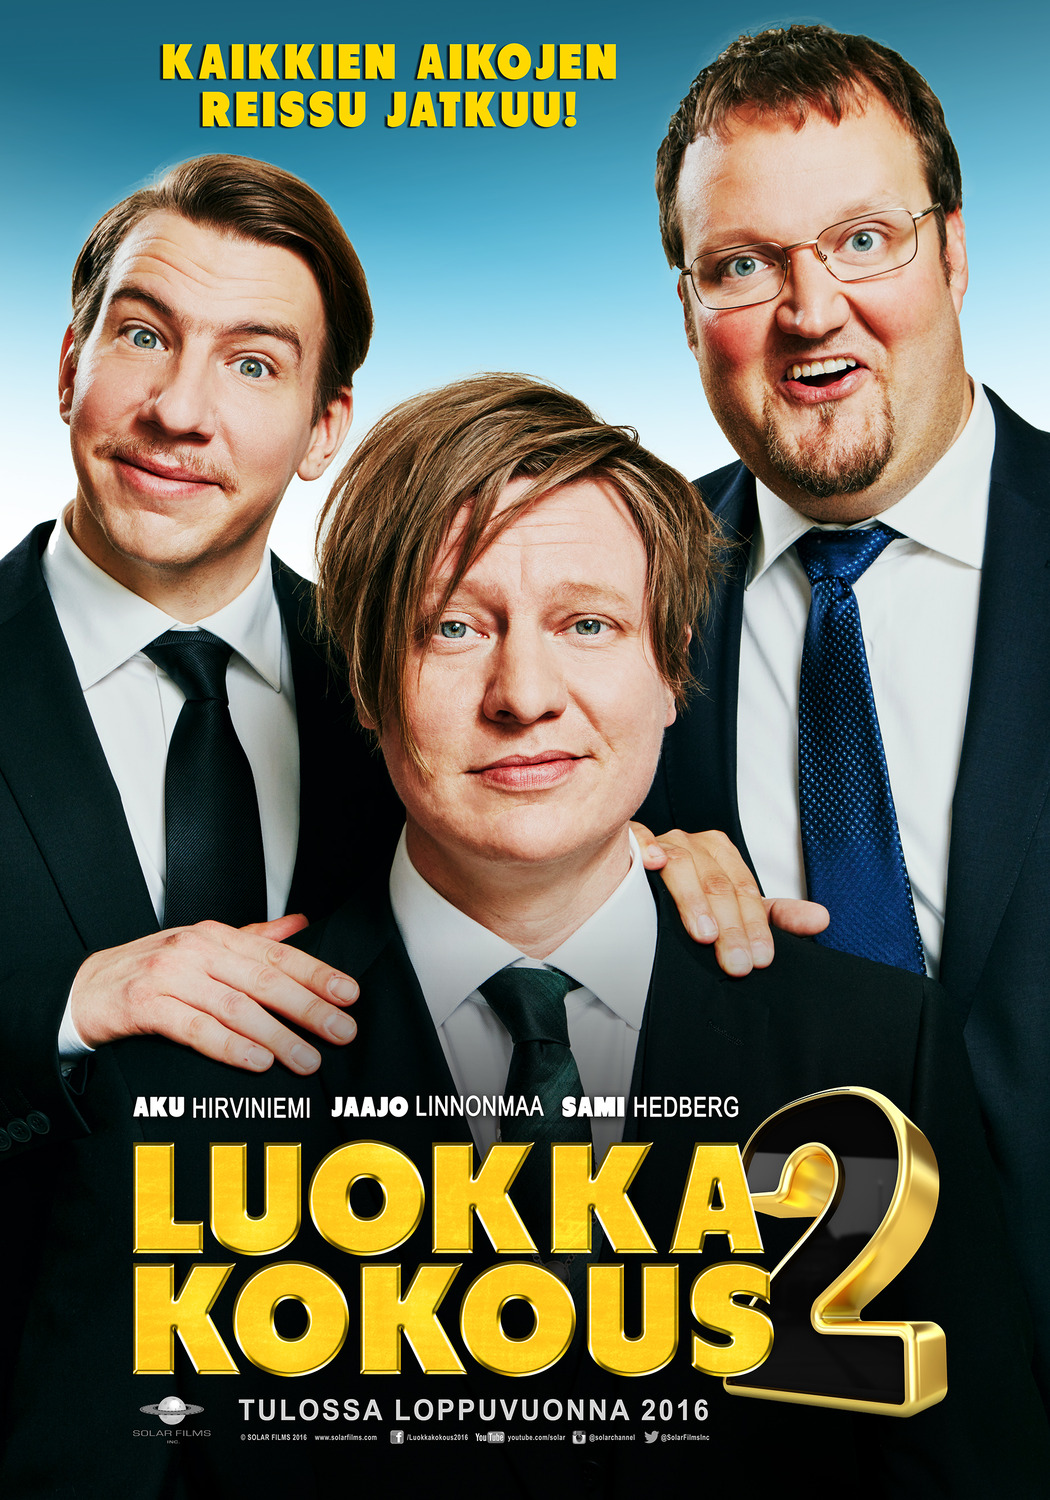 Extra Large Movie Poster Image for Luokkakokous 2 (#1 of 2)